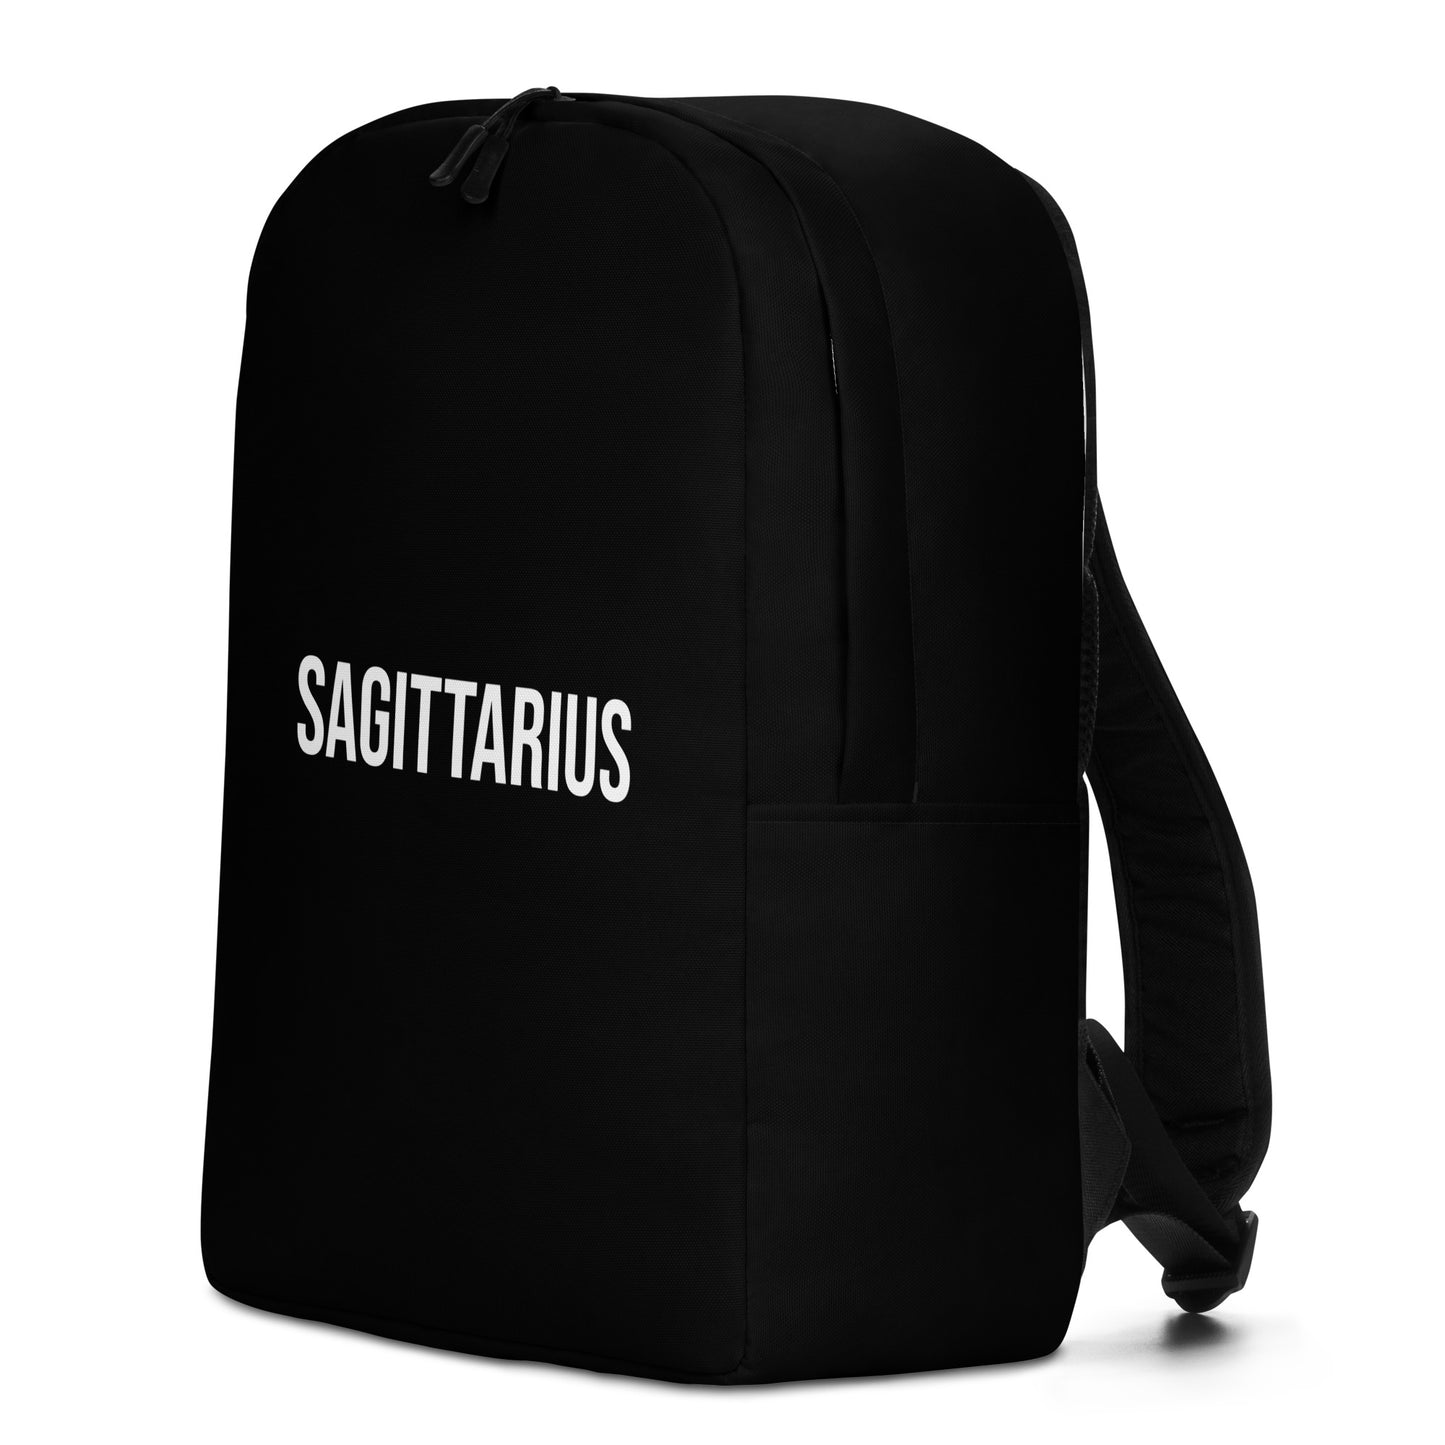 Sagittarius Backpack Black